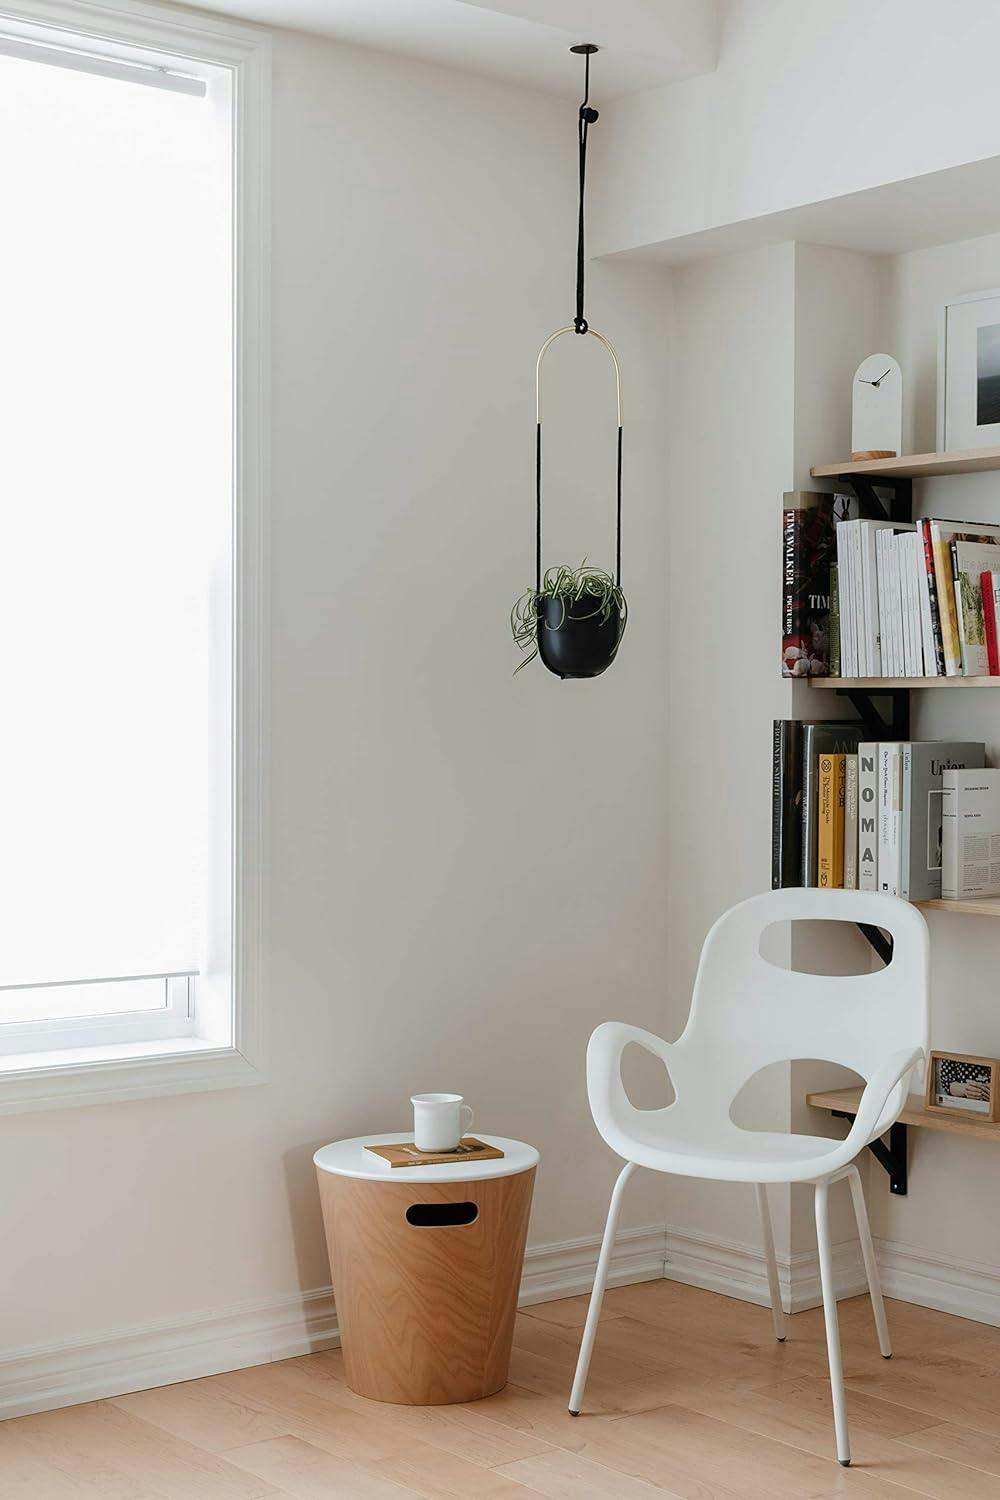 Bolo Soft Curve Black Ceramic Indoor/Outdoor Hanging Planter